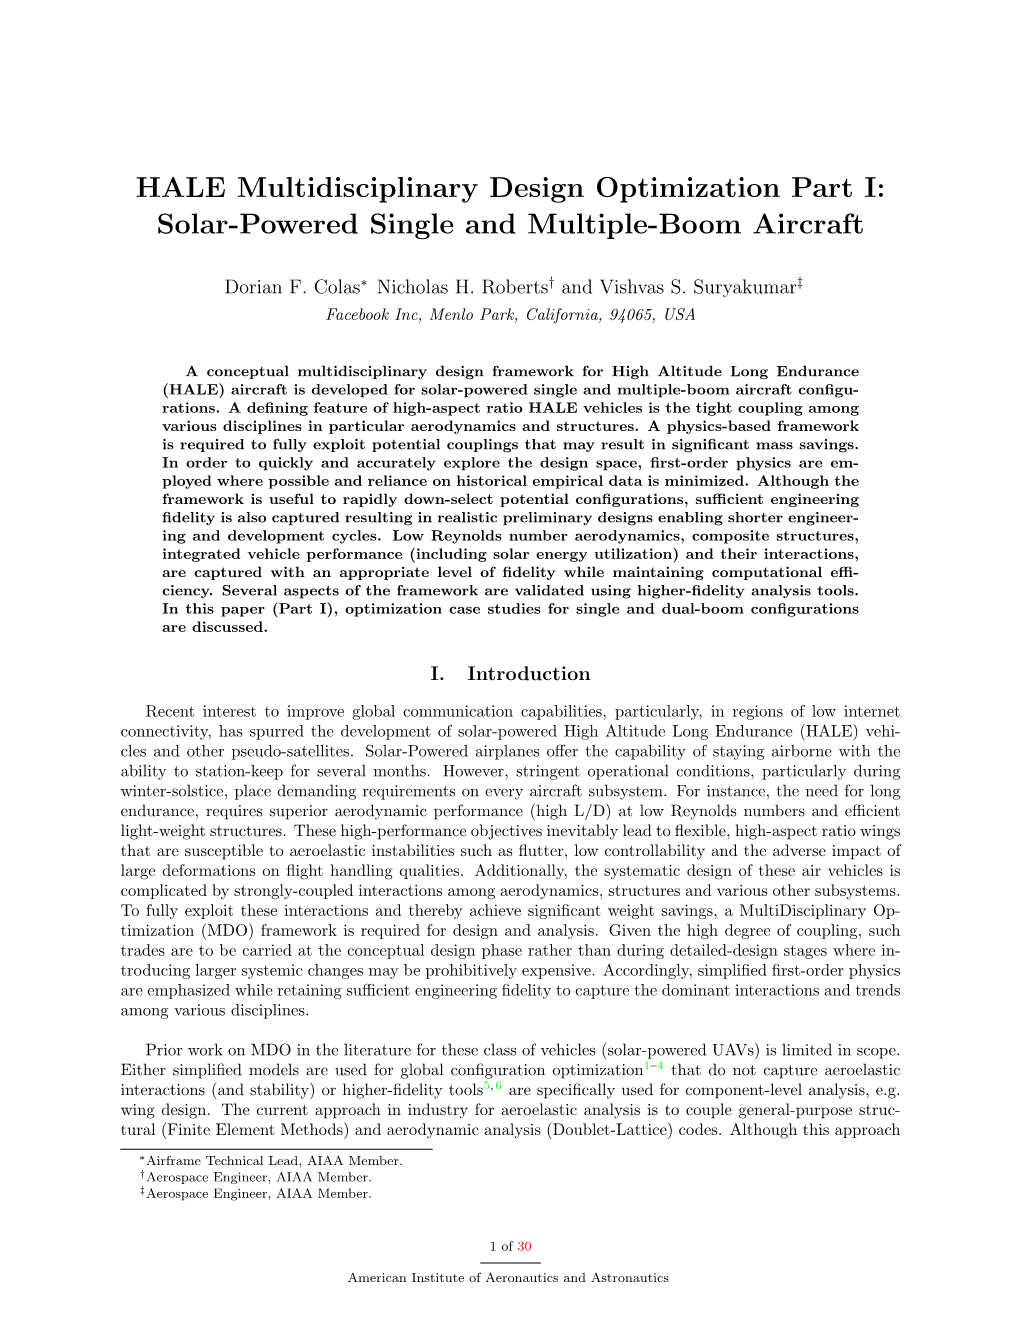 HALE Multidisciplinary Design Optimization Part I: Solar-Powered Single and Multiple-Boom Aircraft